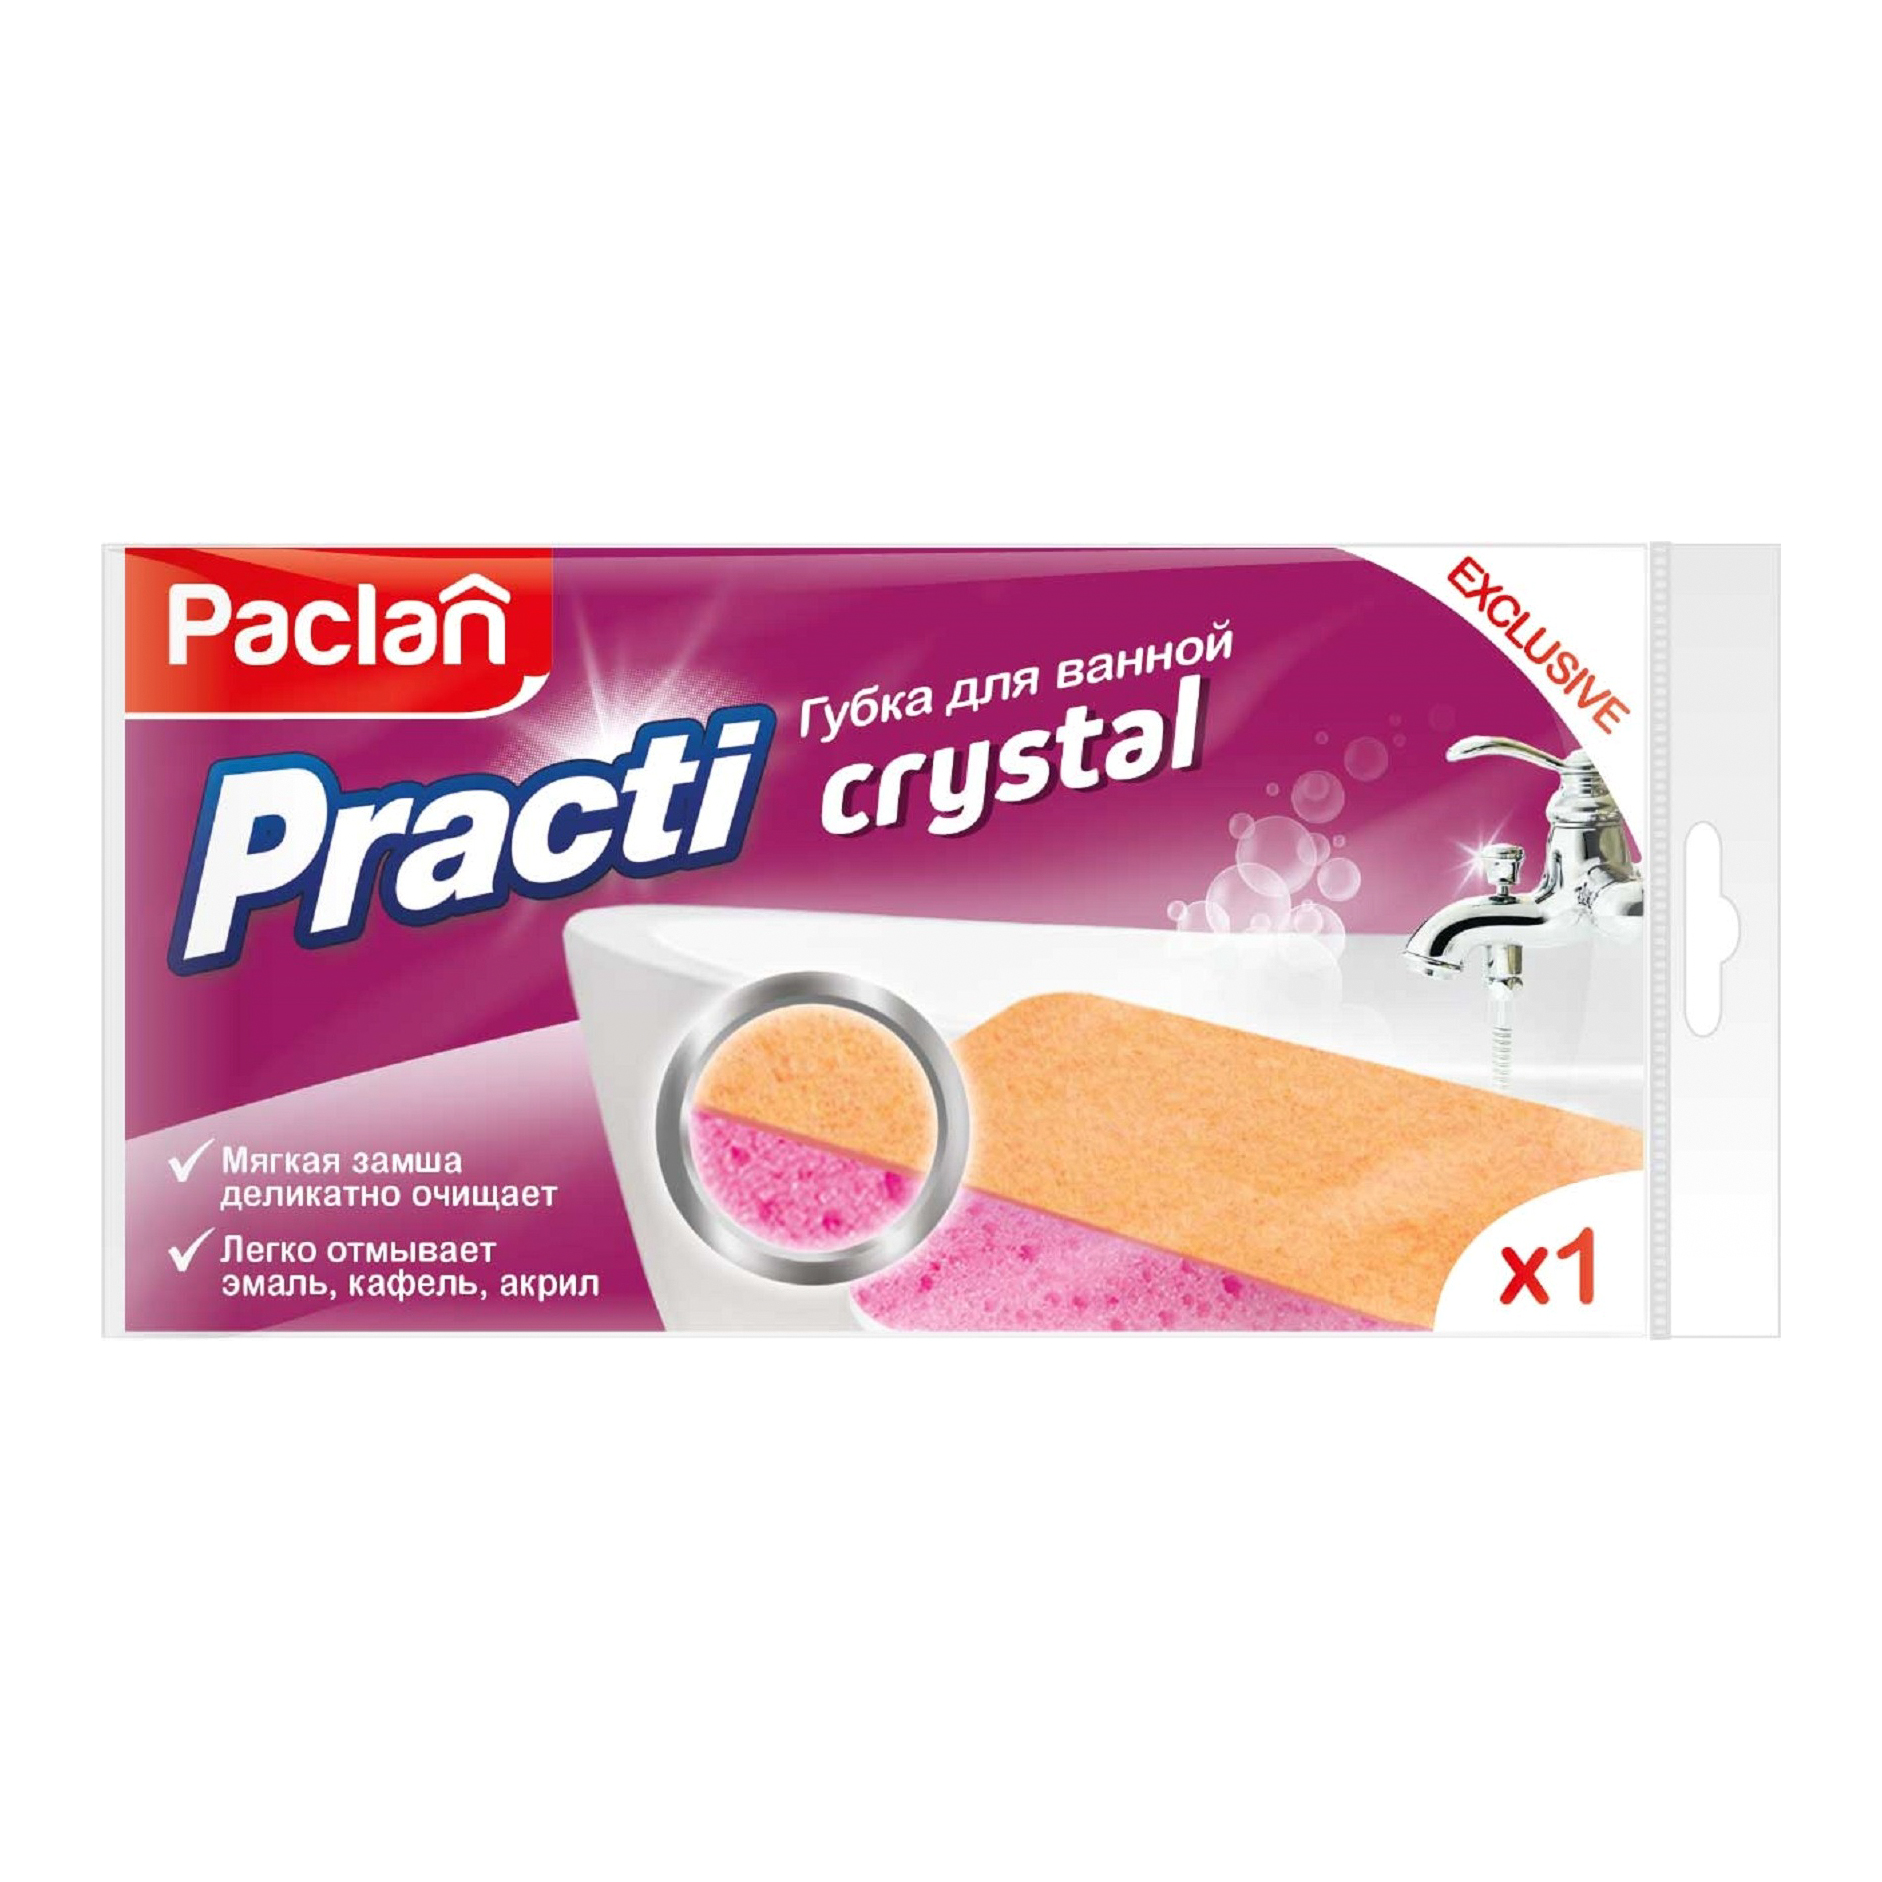 Губка для ванной Paclan Practi Crystal губка для ванной и кафеля eurohouse